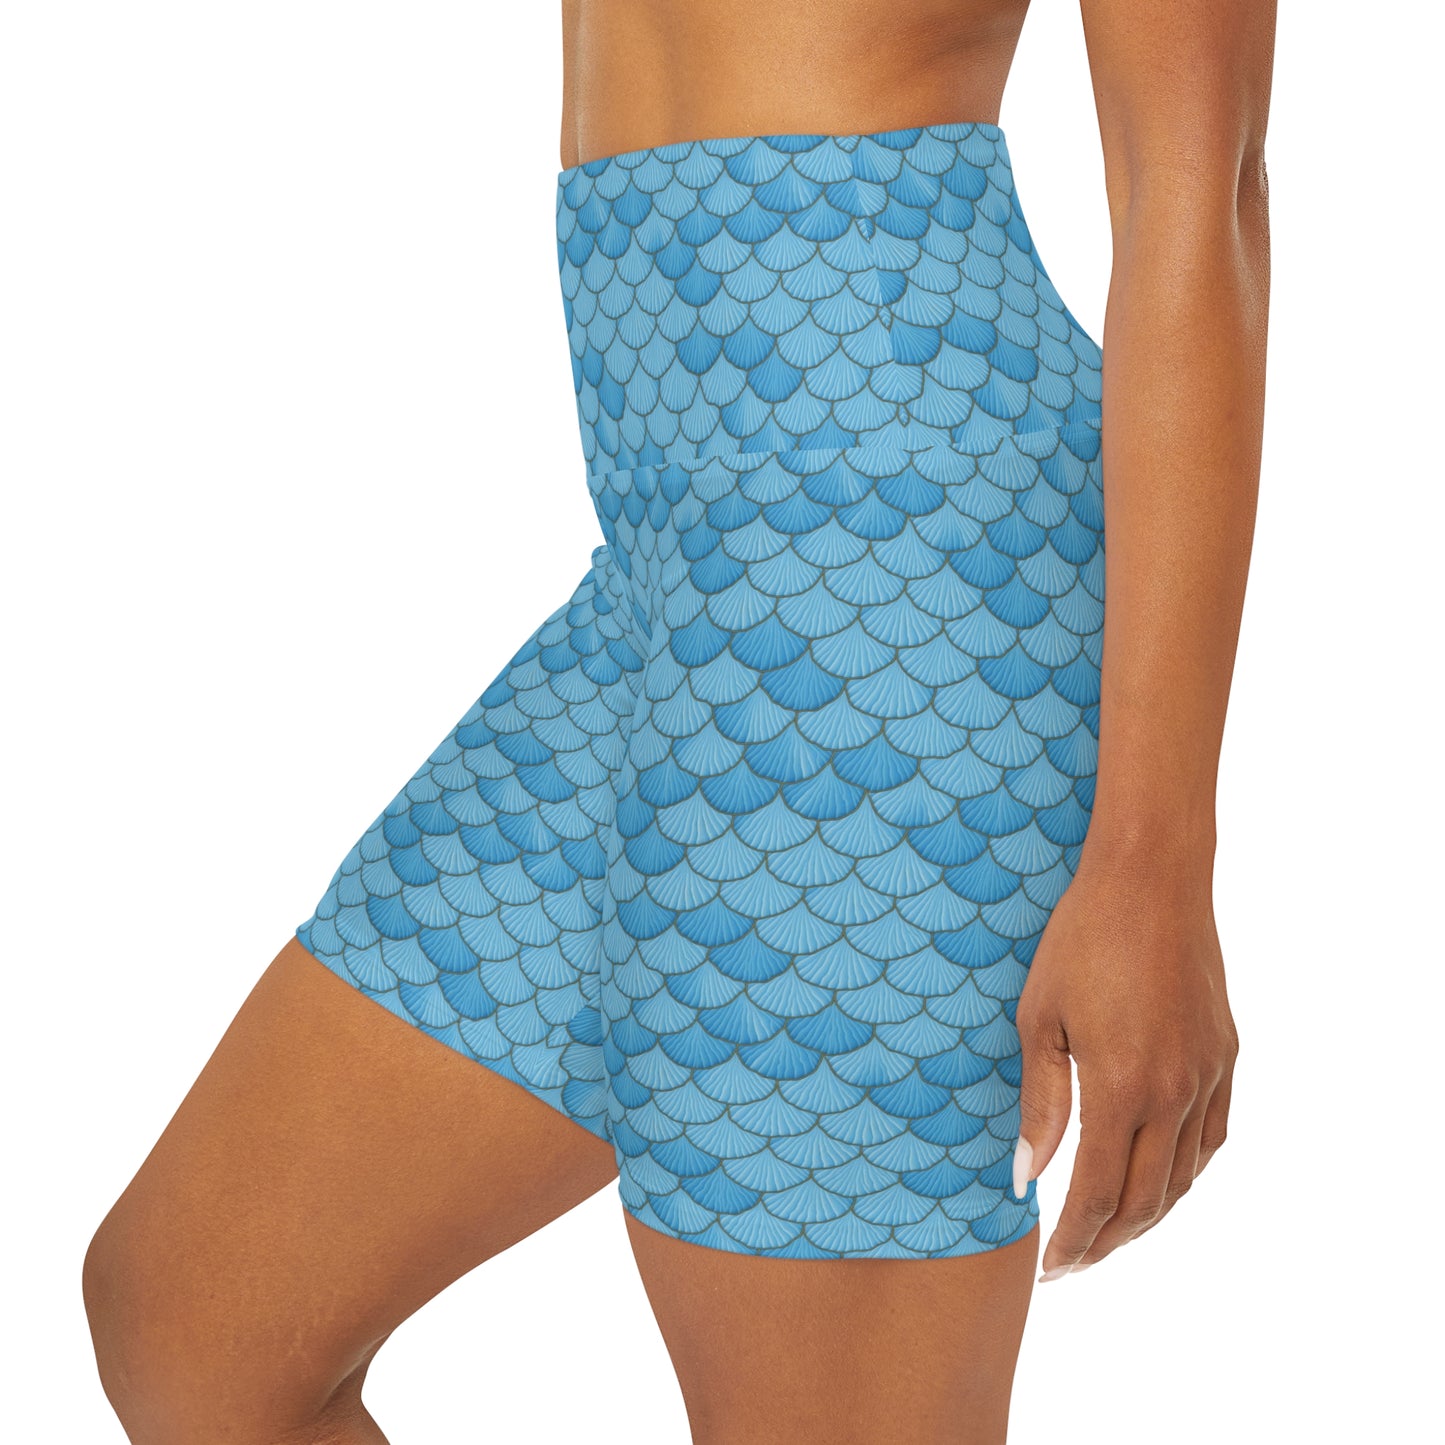 High-Waisted Yoga Shorts | Blue Seashell Mermaid Design | Butter-Soft Fabric, Workout Attire, Yoga Shorts